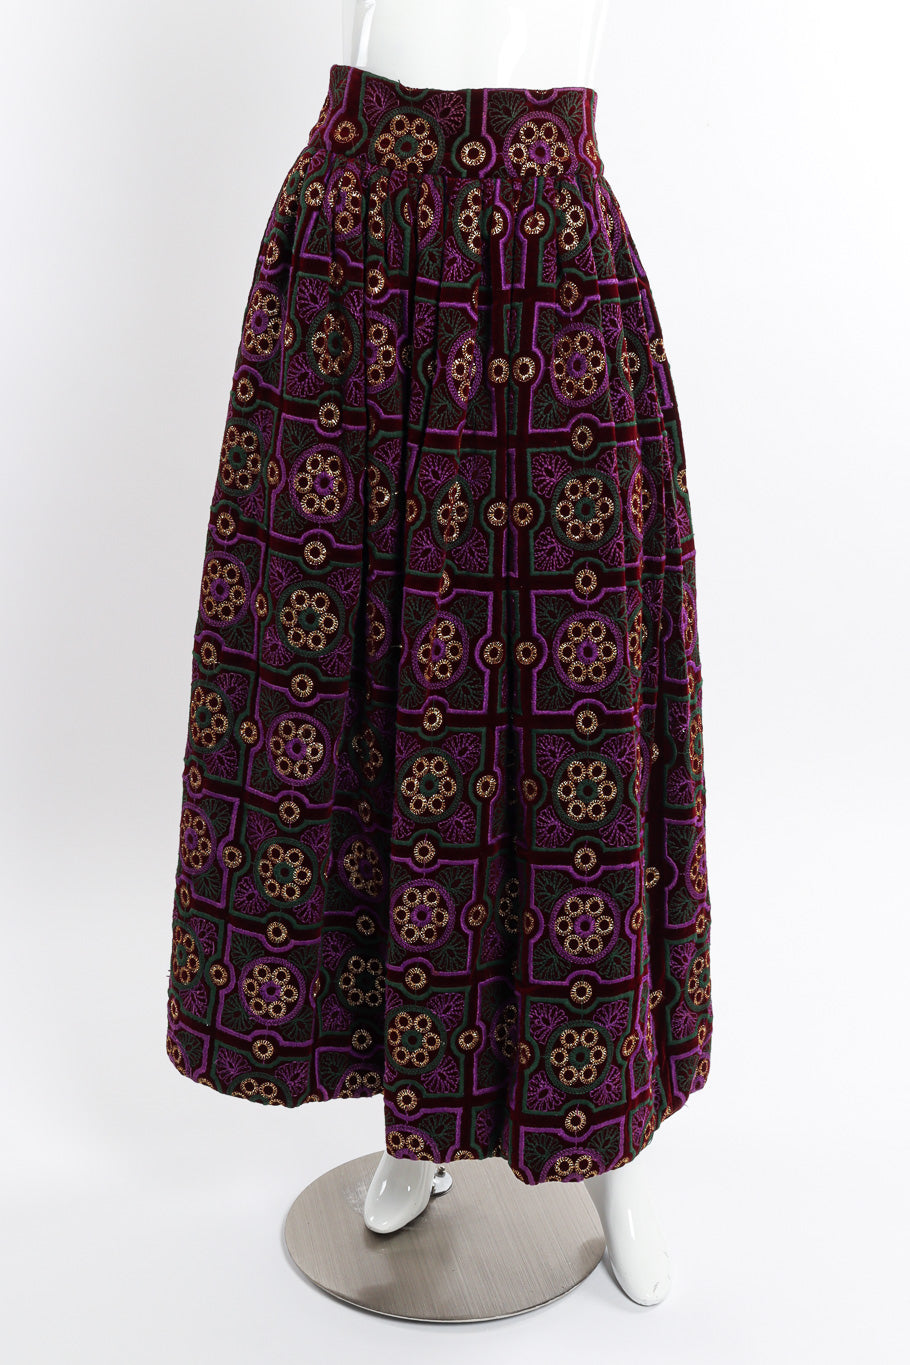 Vintage Adolfo Geometric Embroidered Velvet Skirt front view on mannequin @recessla